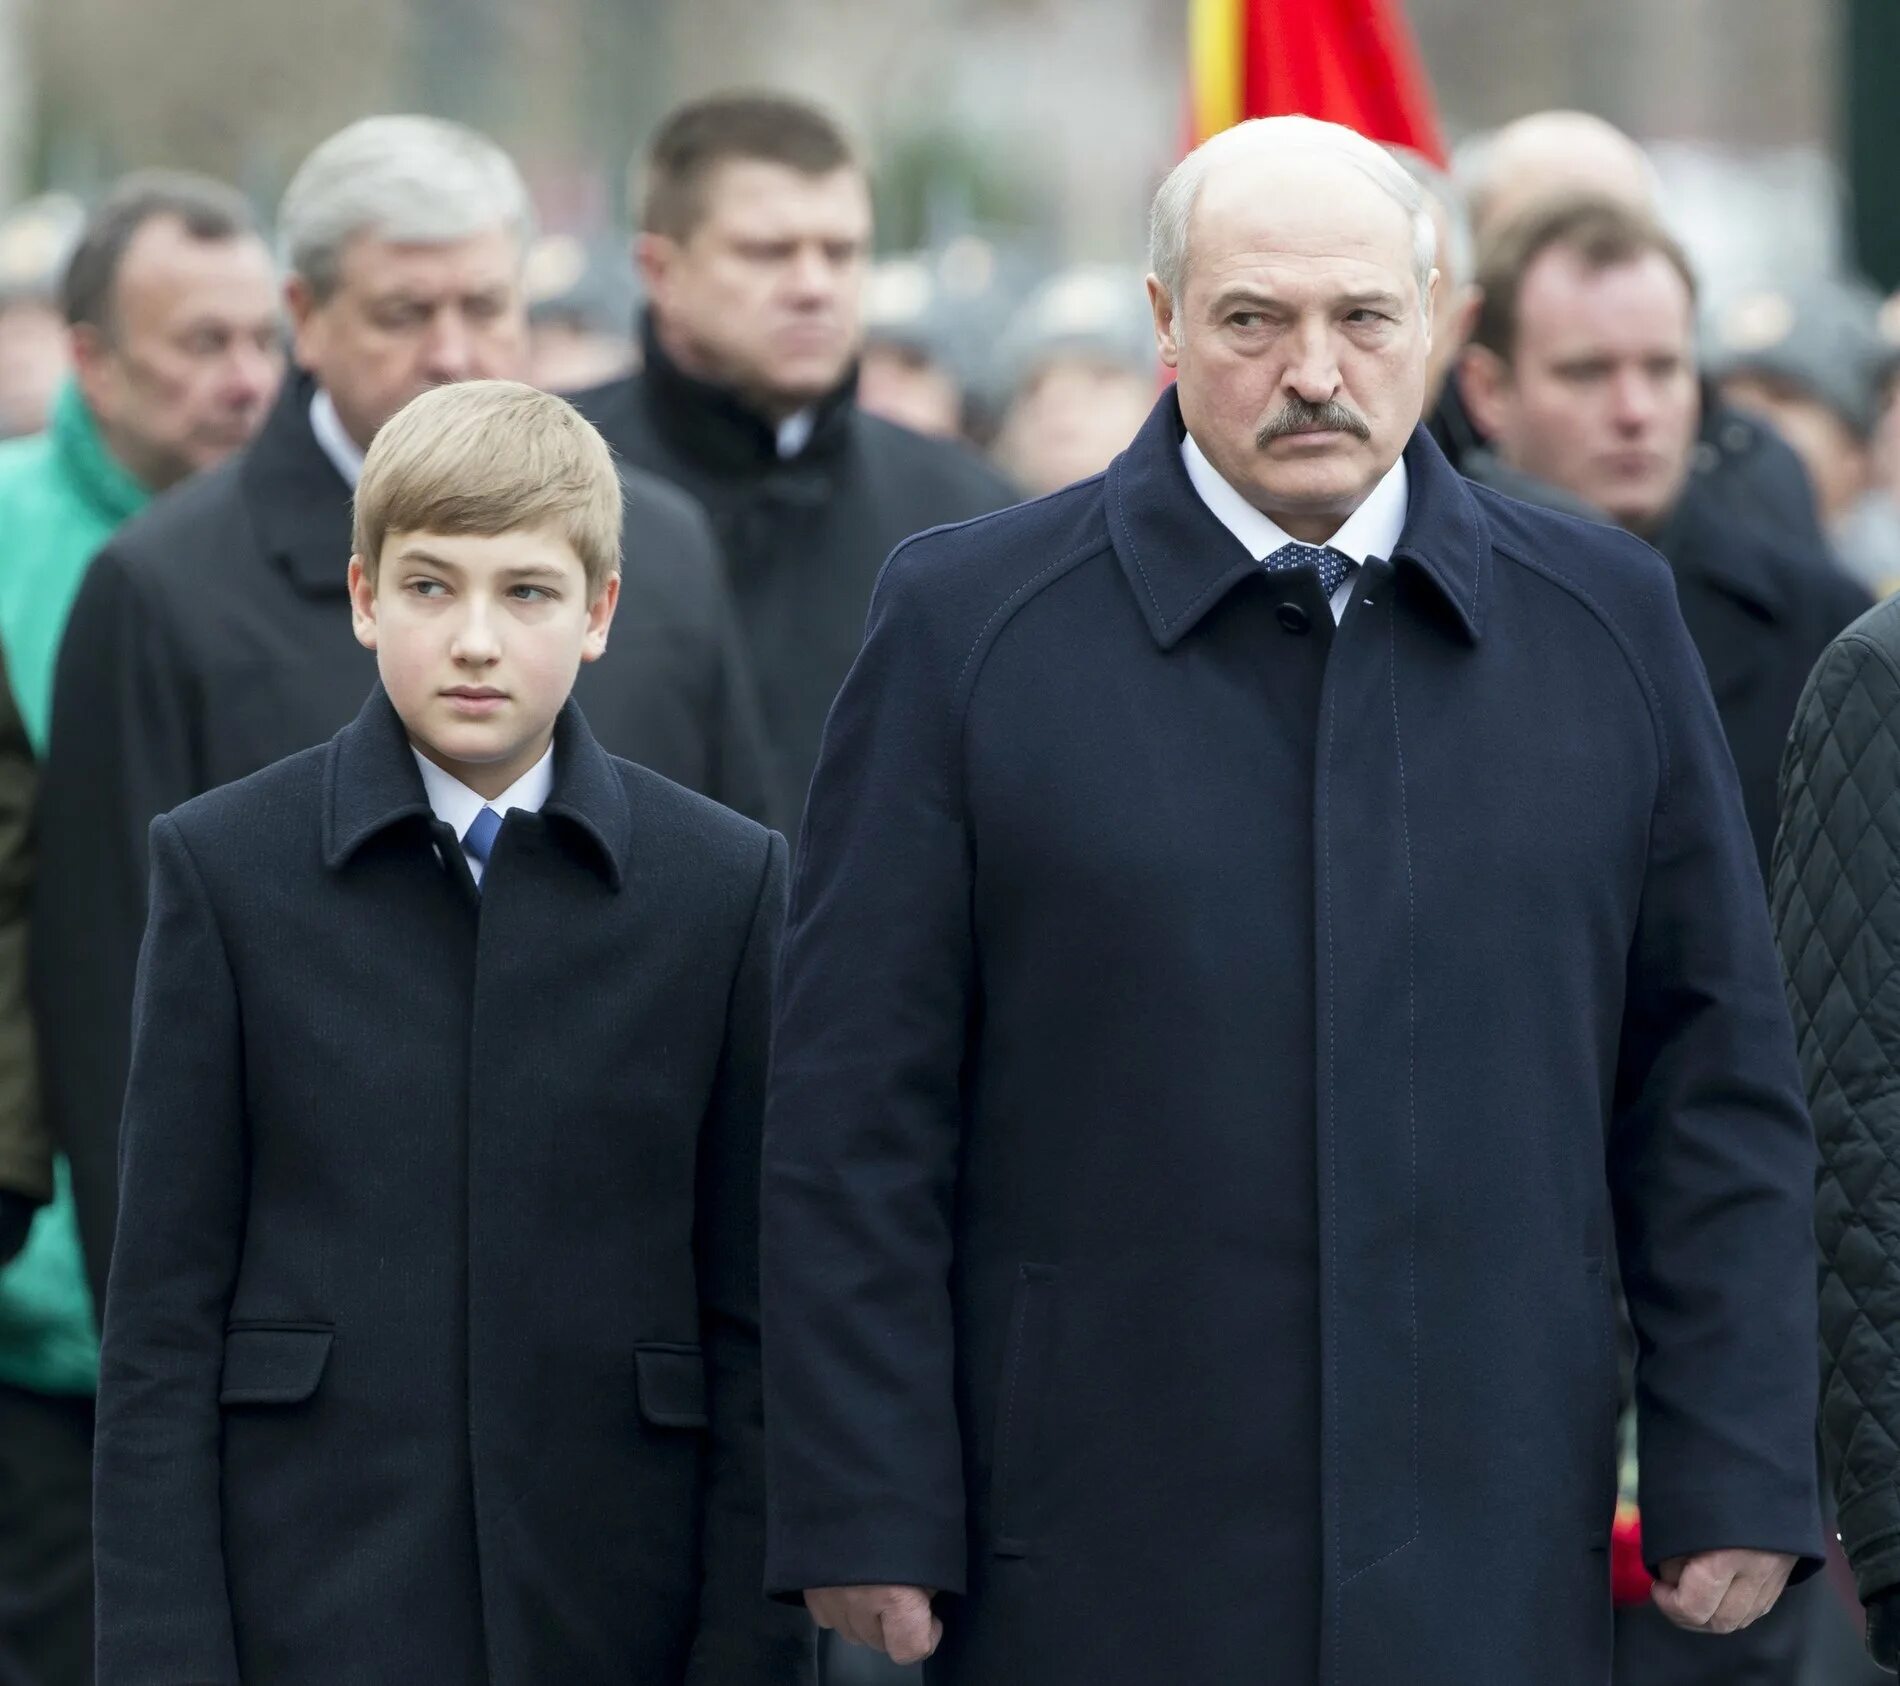 Дети лукашенко фото. Сын Лукашенко Коля. Сын президента Белоруссии Лукашенко.